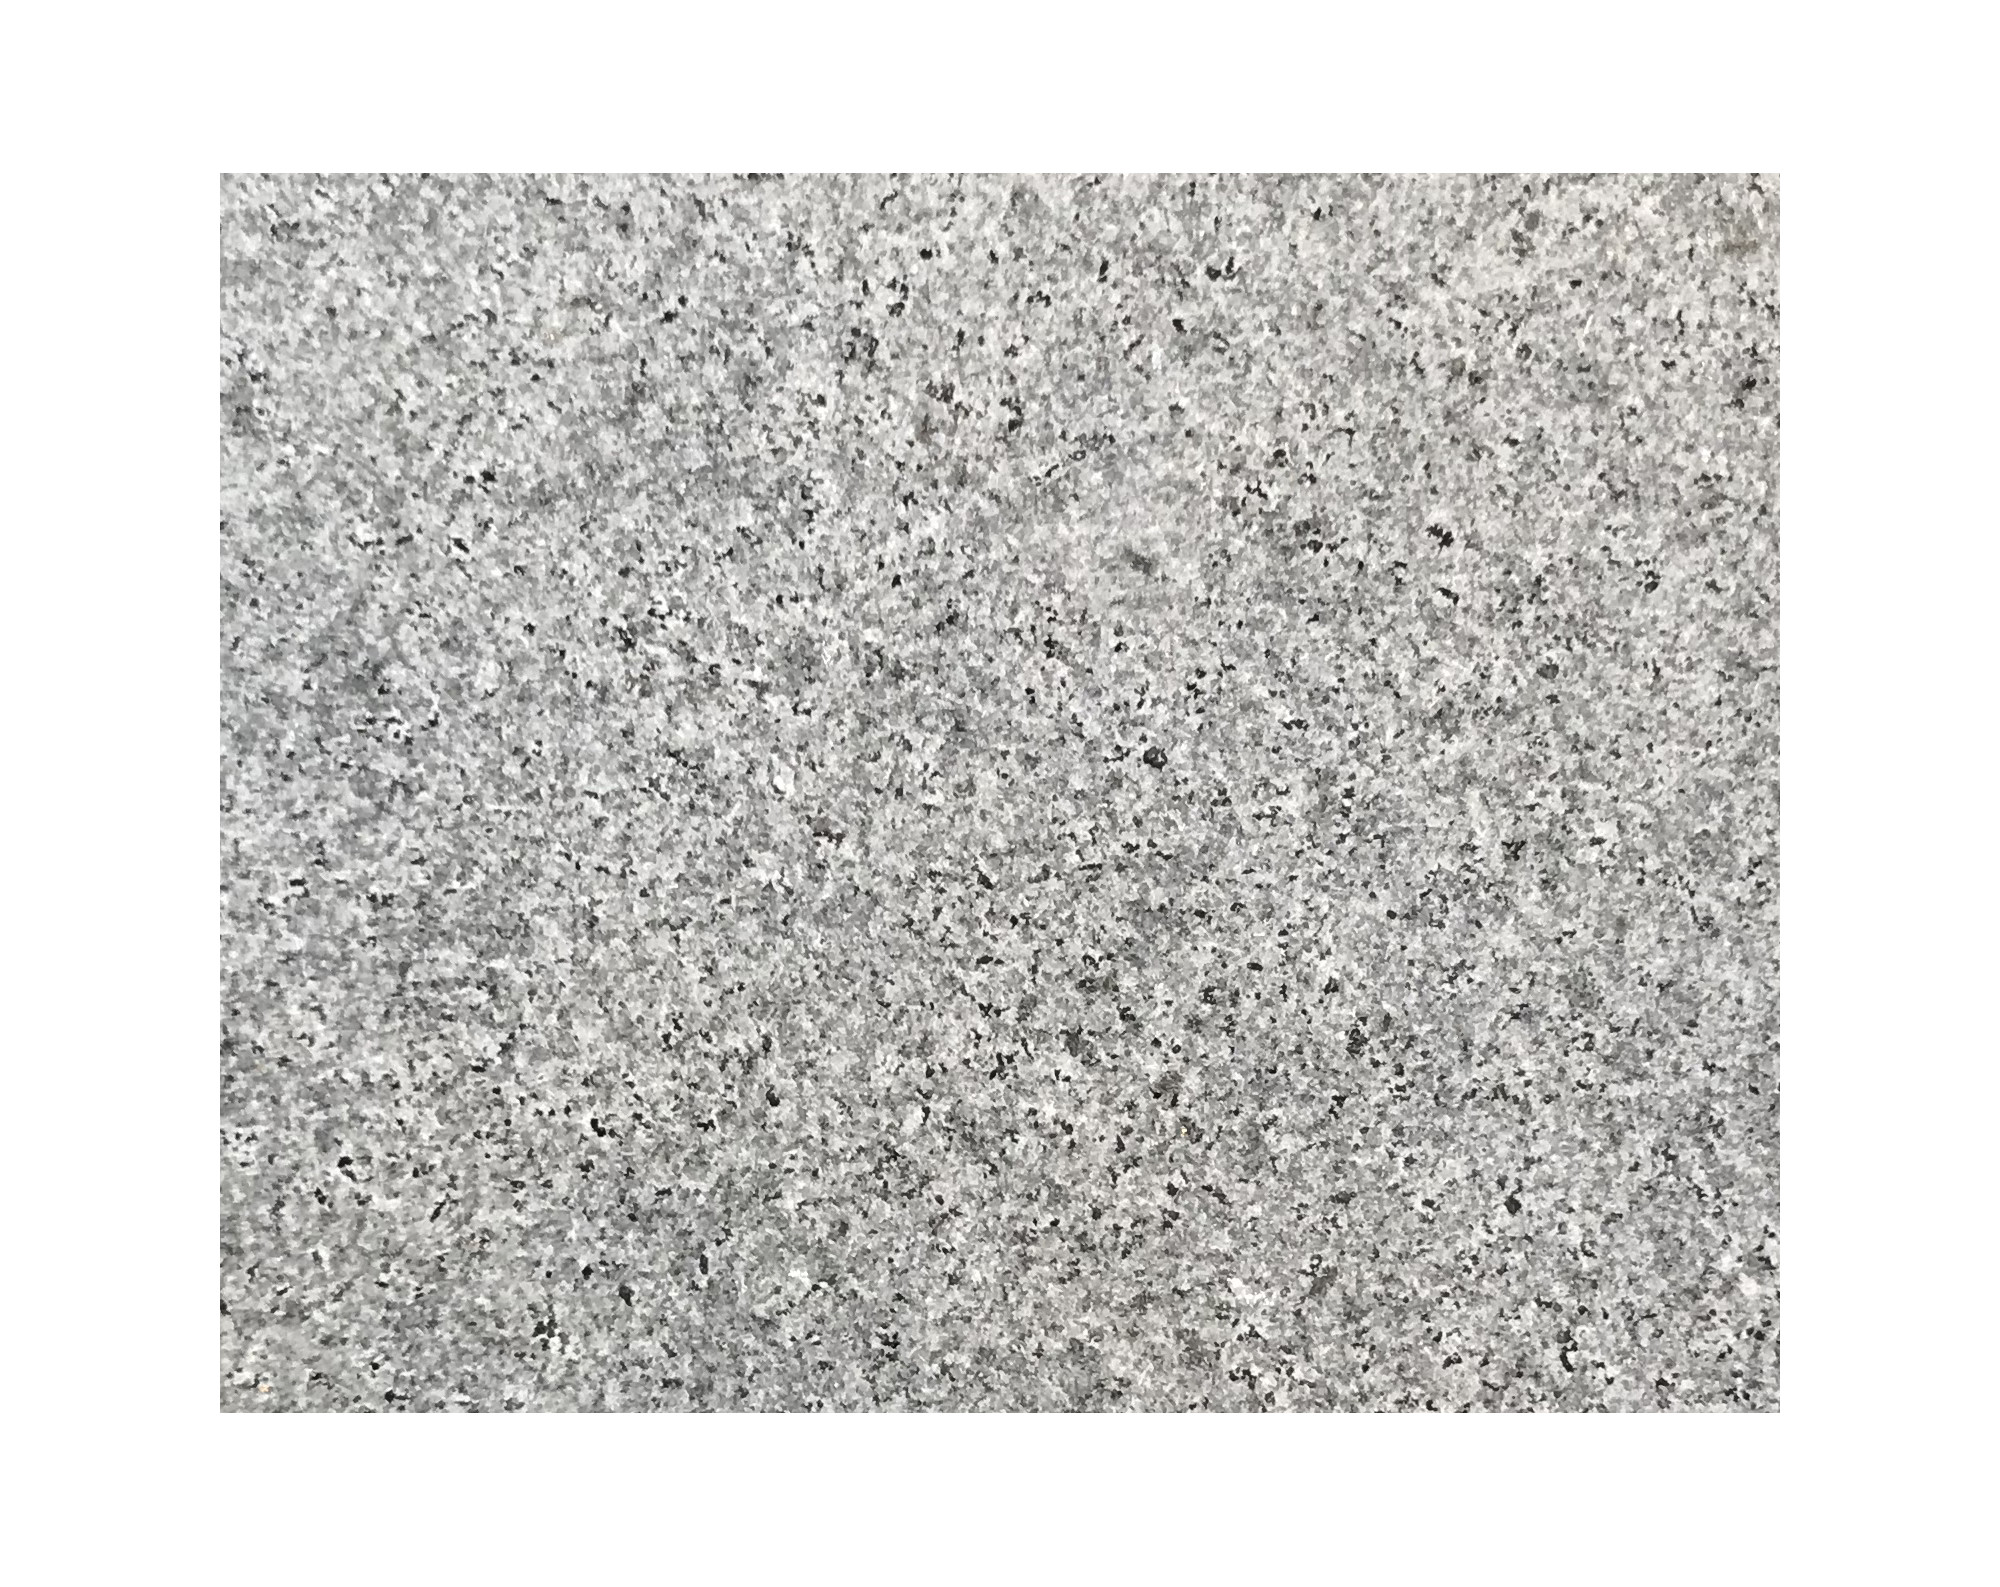 Harmo roc napoliset, natura-serie, 8-vormig d:5,50mx8,55m, berggrijs, graniet